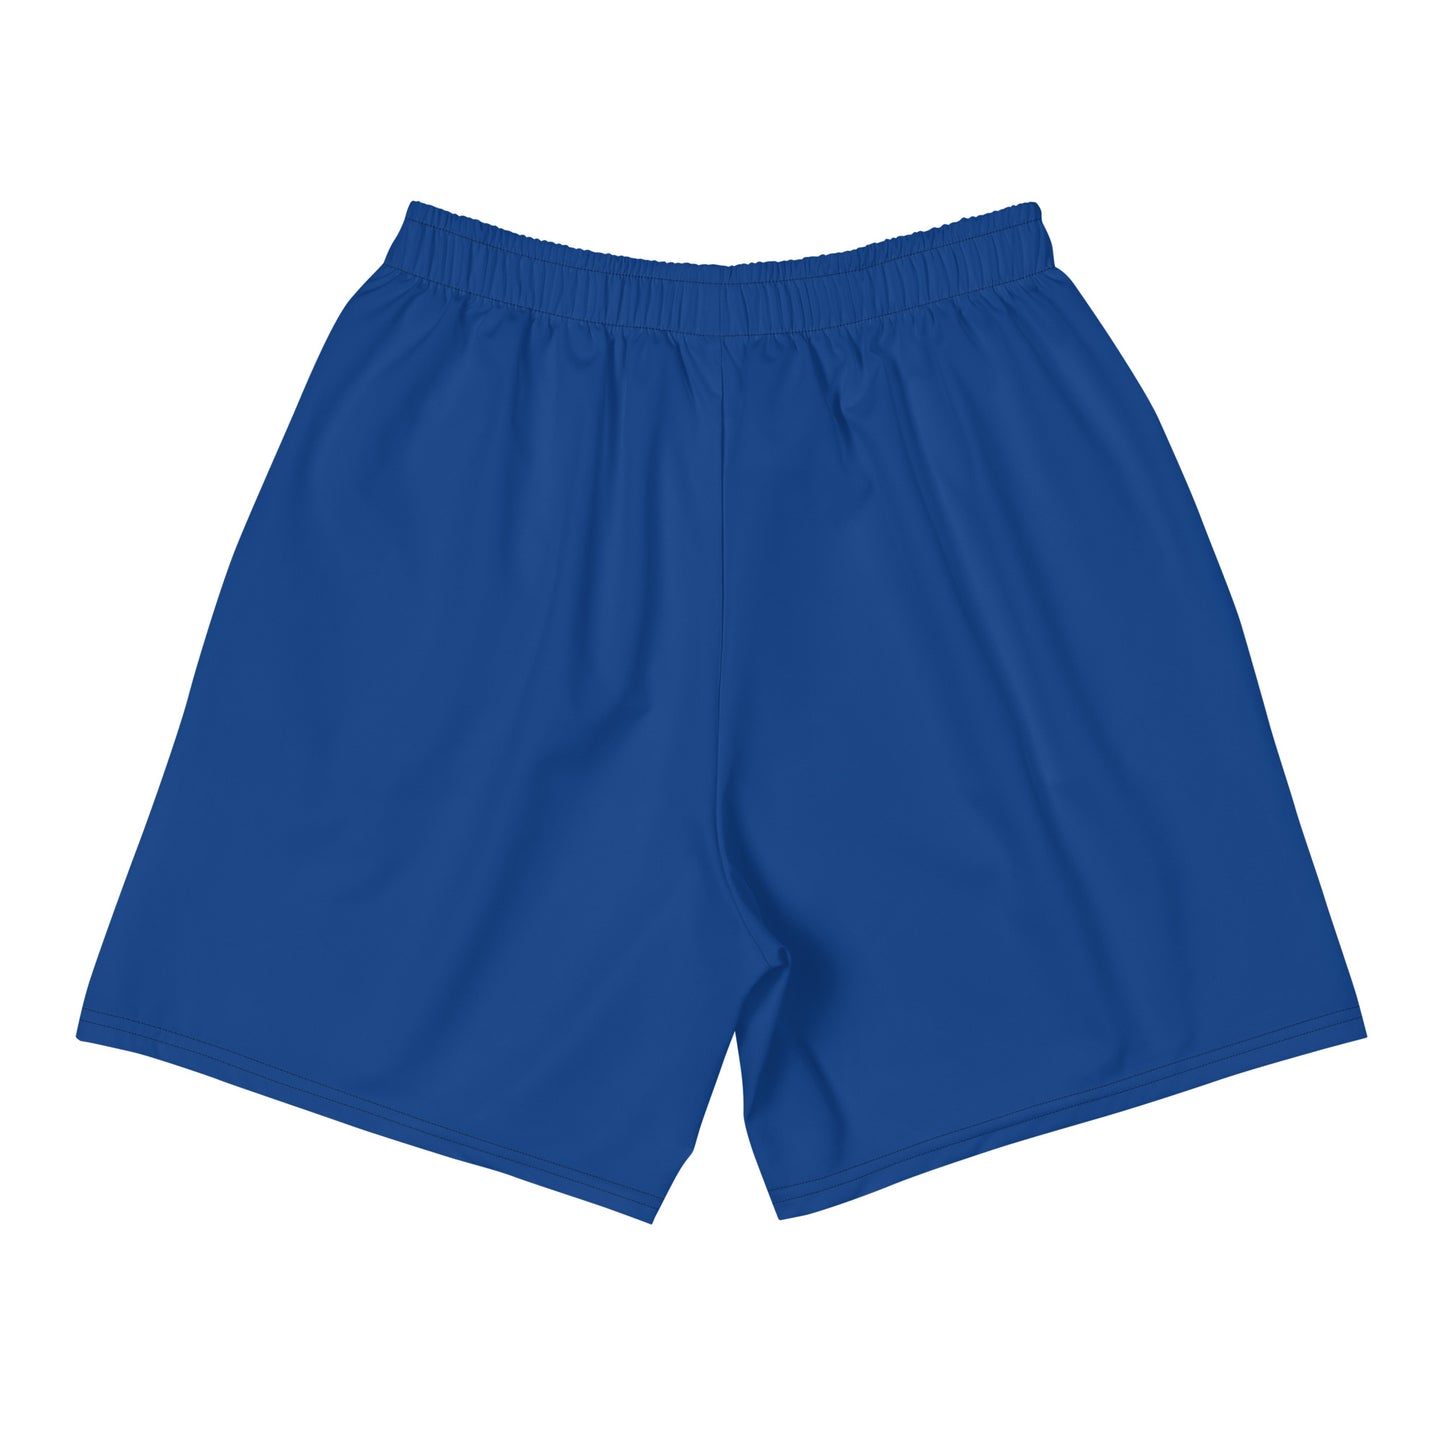 Cerulean Blue University Athletic Shorts